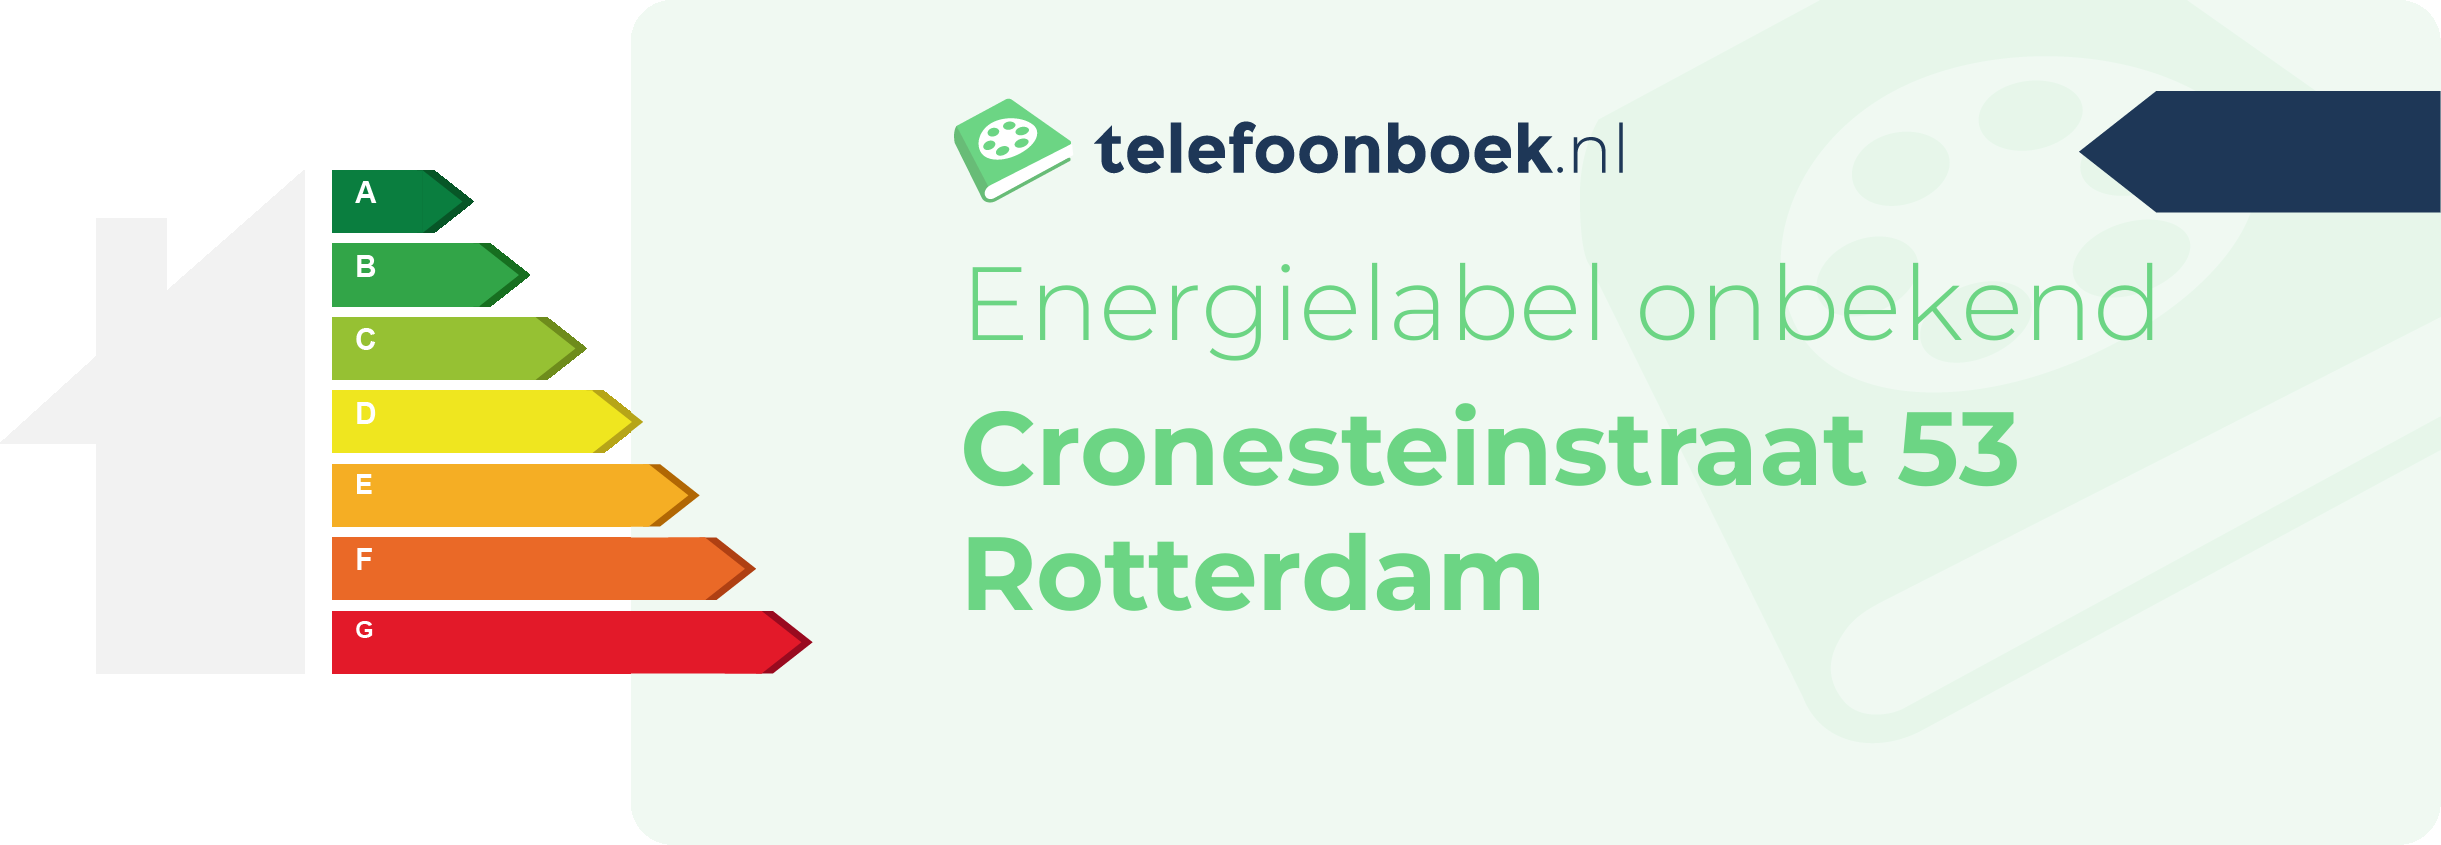 Energielabel Cronesteinstraat 53 Rotterdam